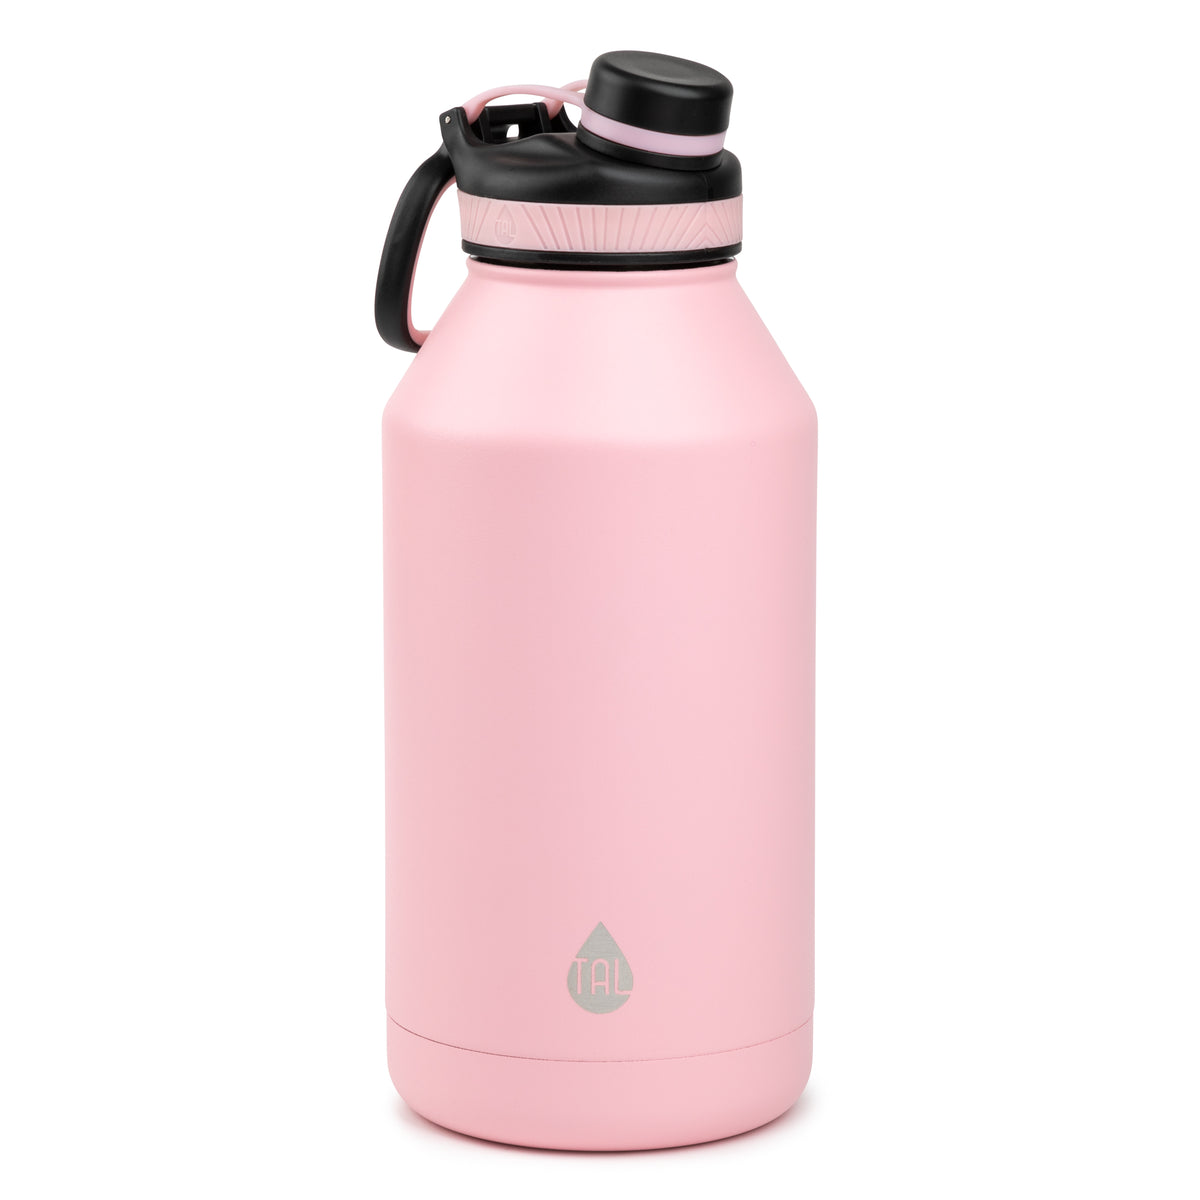 TAL Stainless Steel Ranger Water Bottle 64 oz, Pink